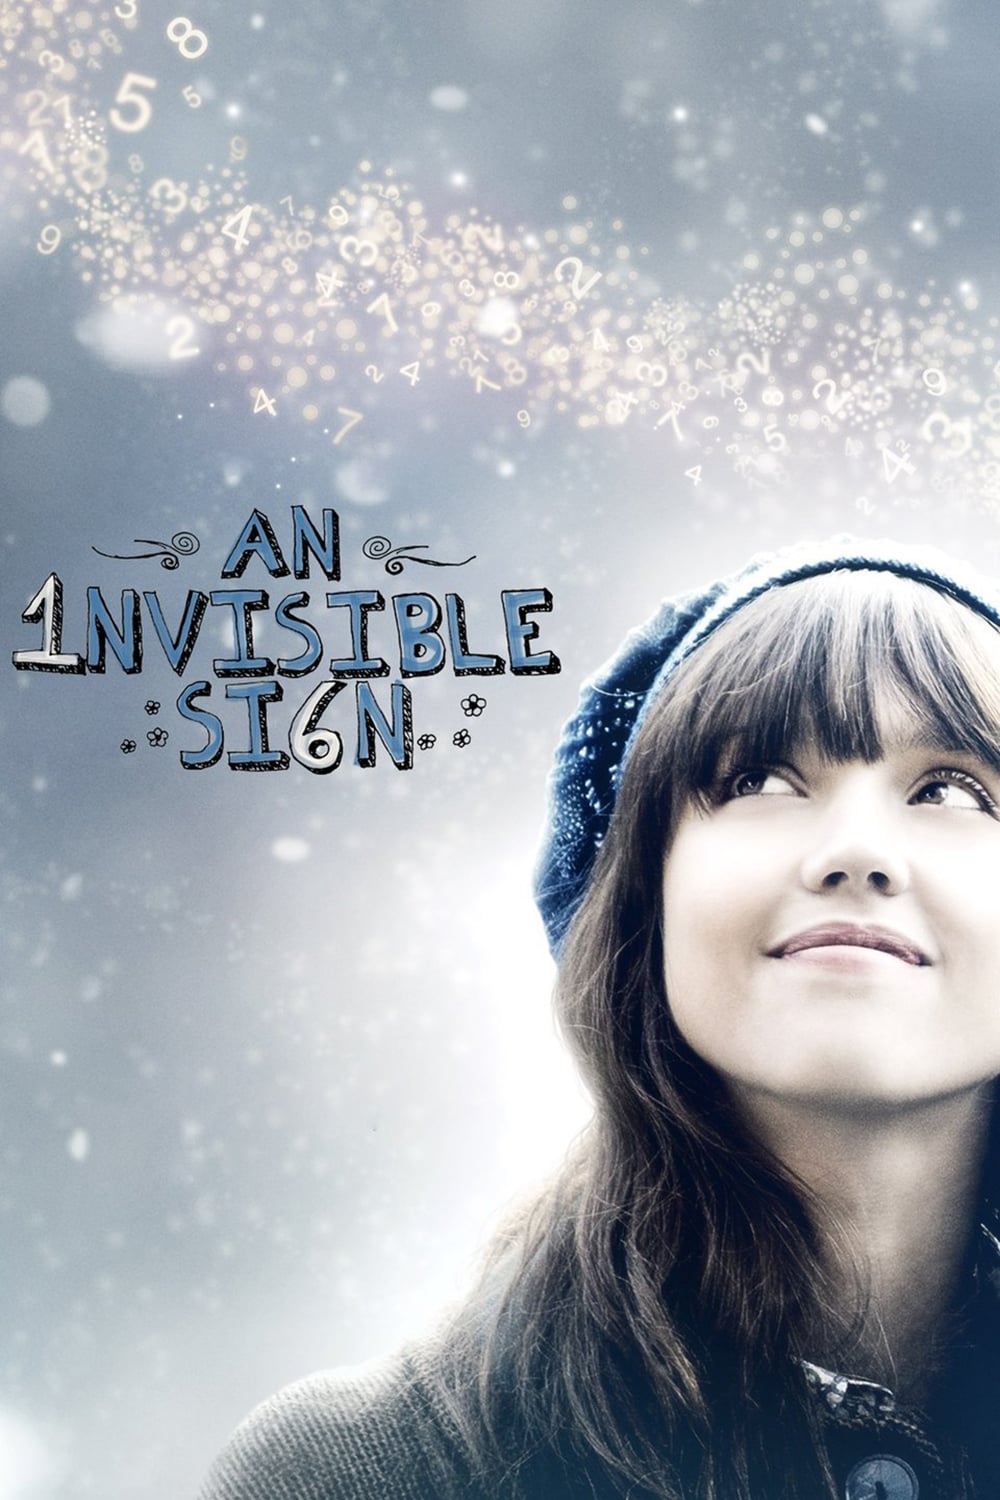 Plakat von "An Invisible Sign"